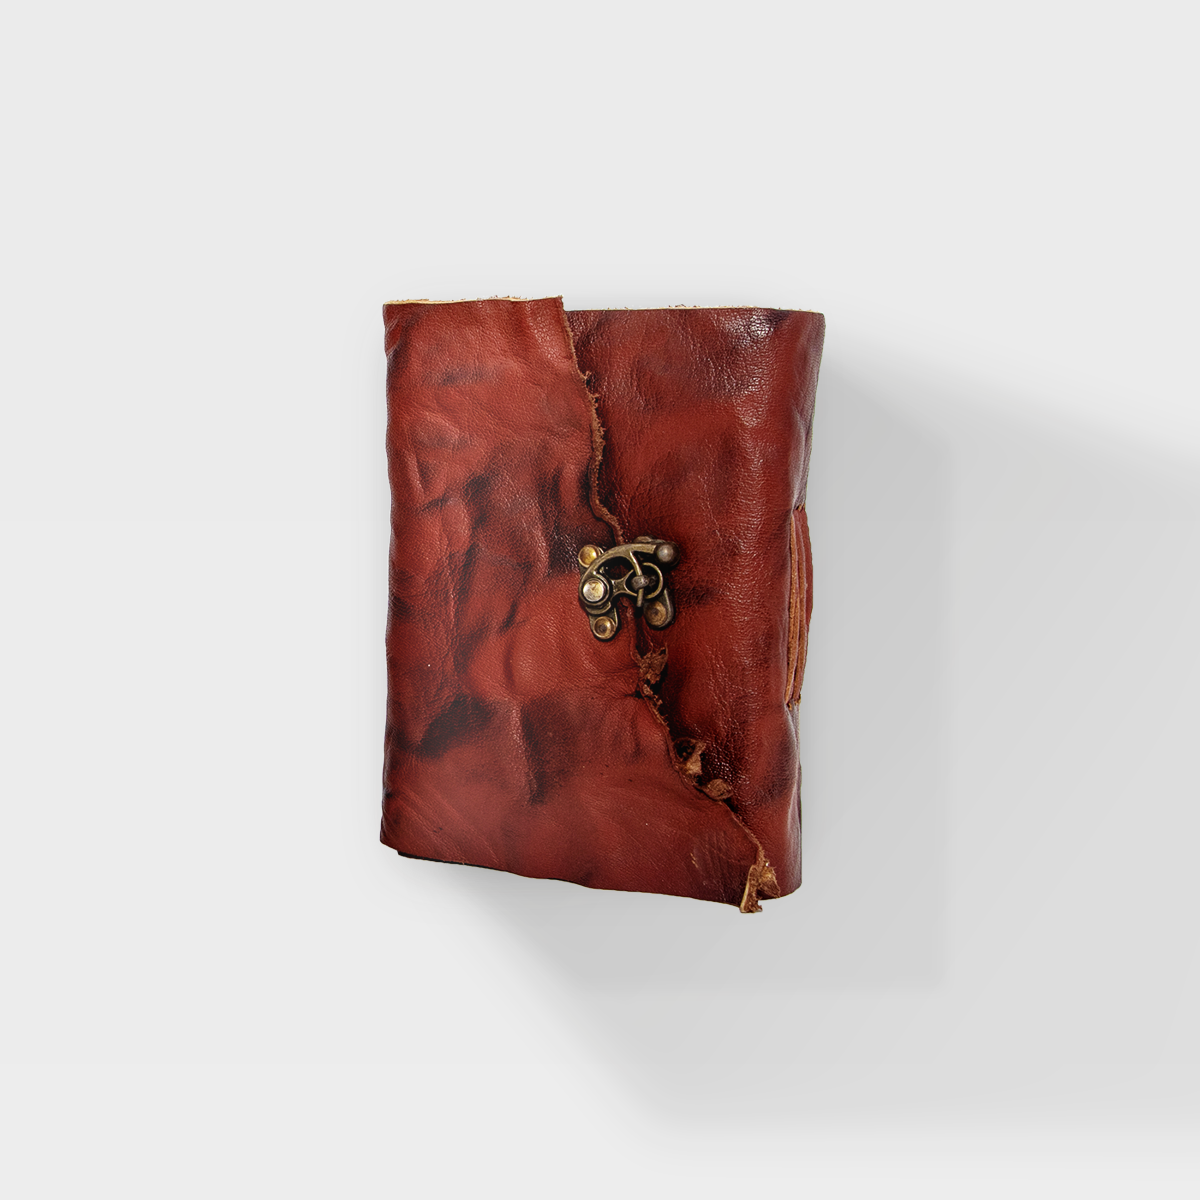 Antique Leather Journal - 5x7 - Brass Latch